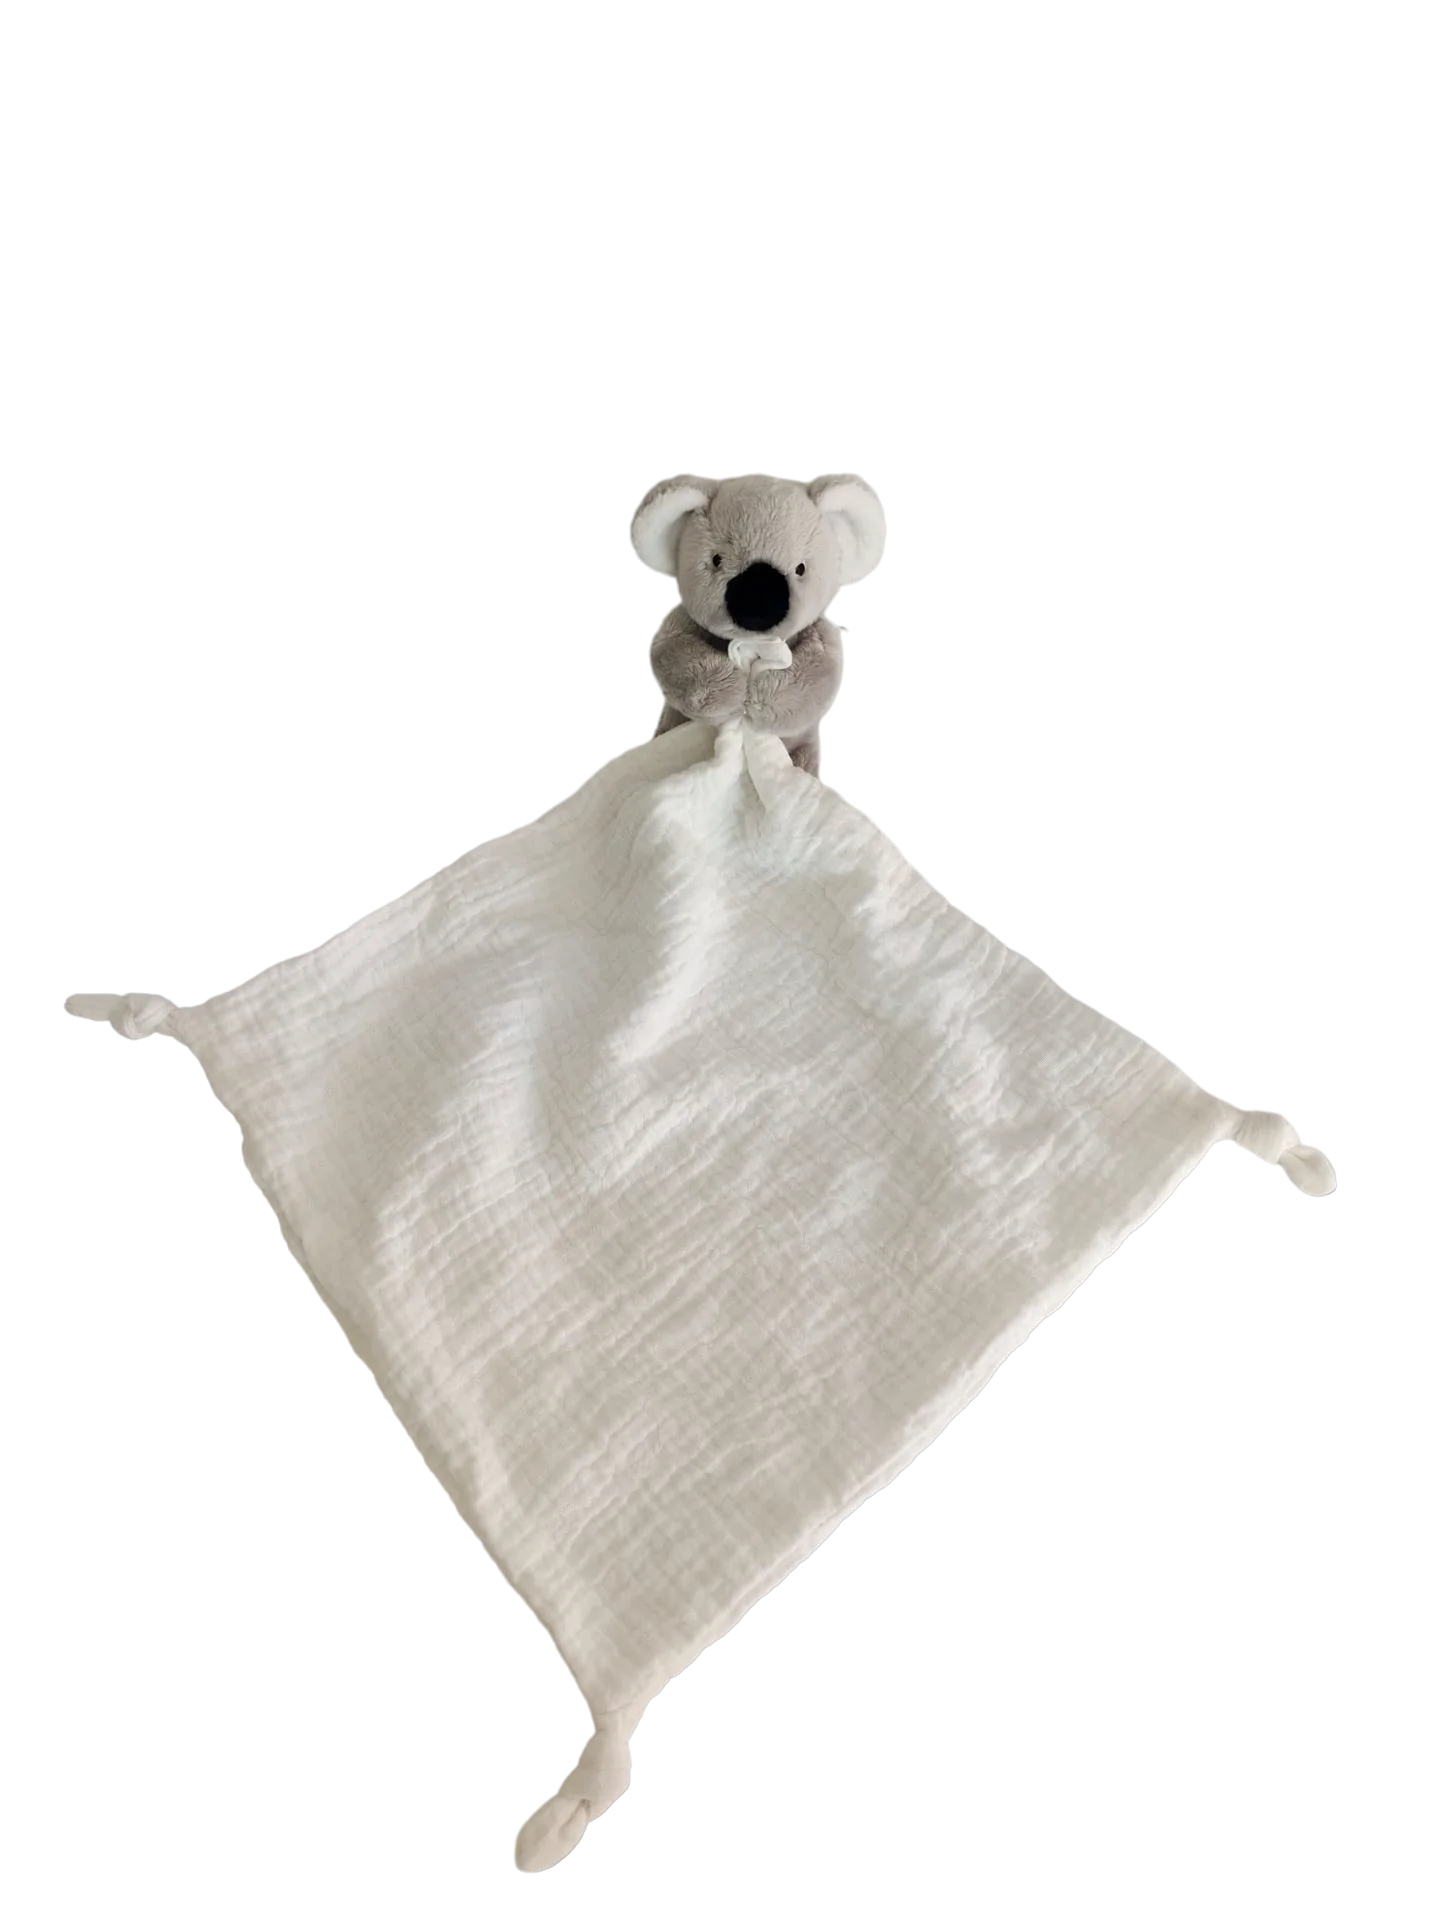 Petite Vous - Kip the Koala with White Muslin Comforter